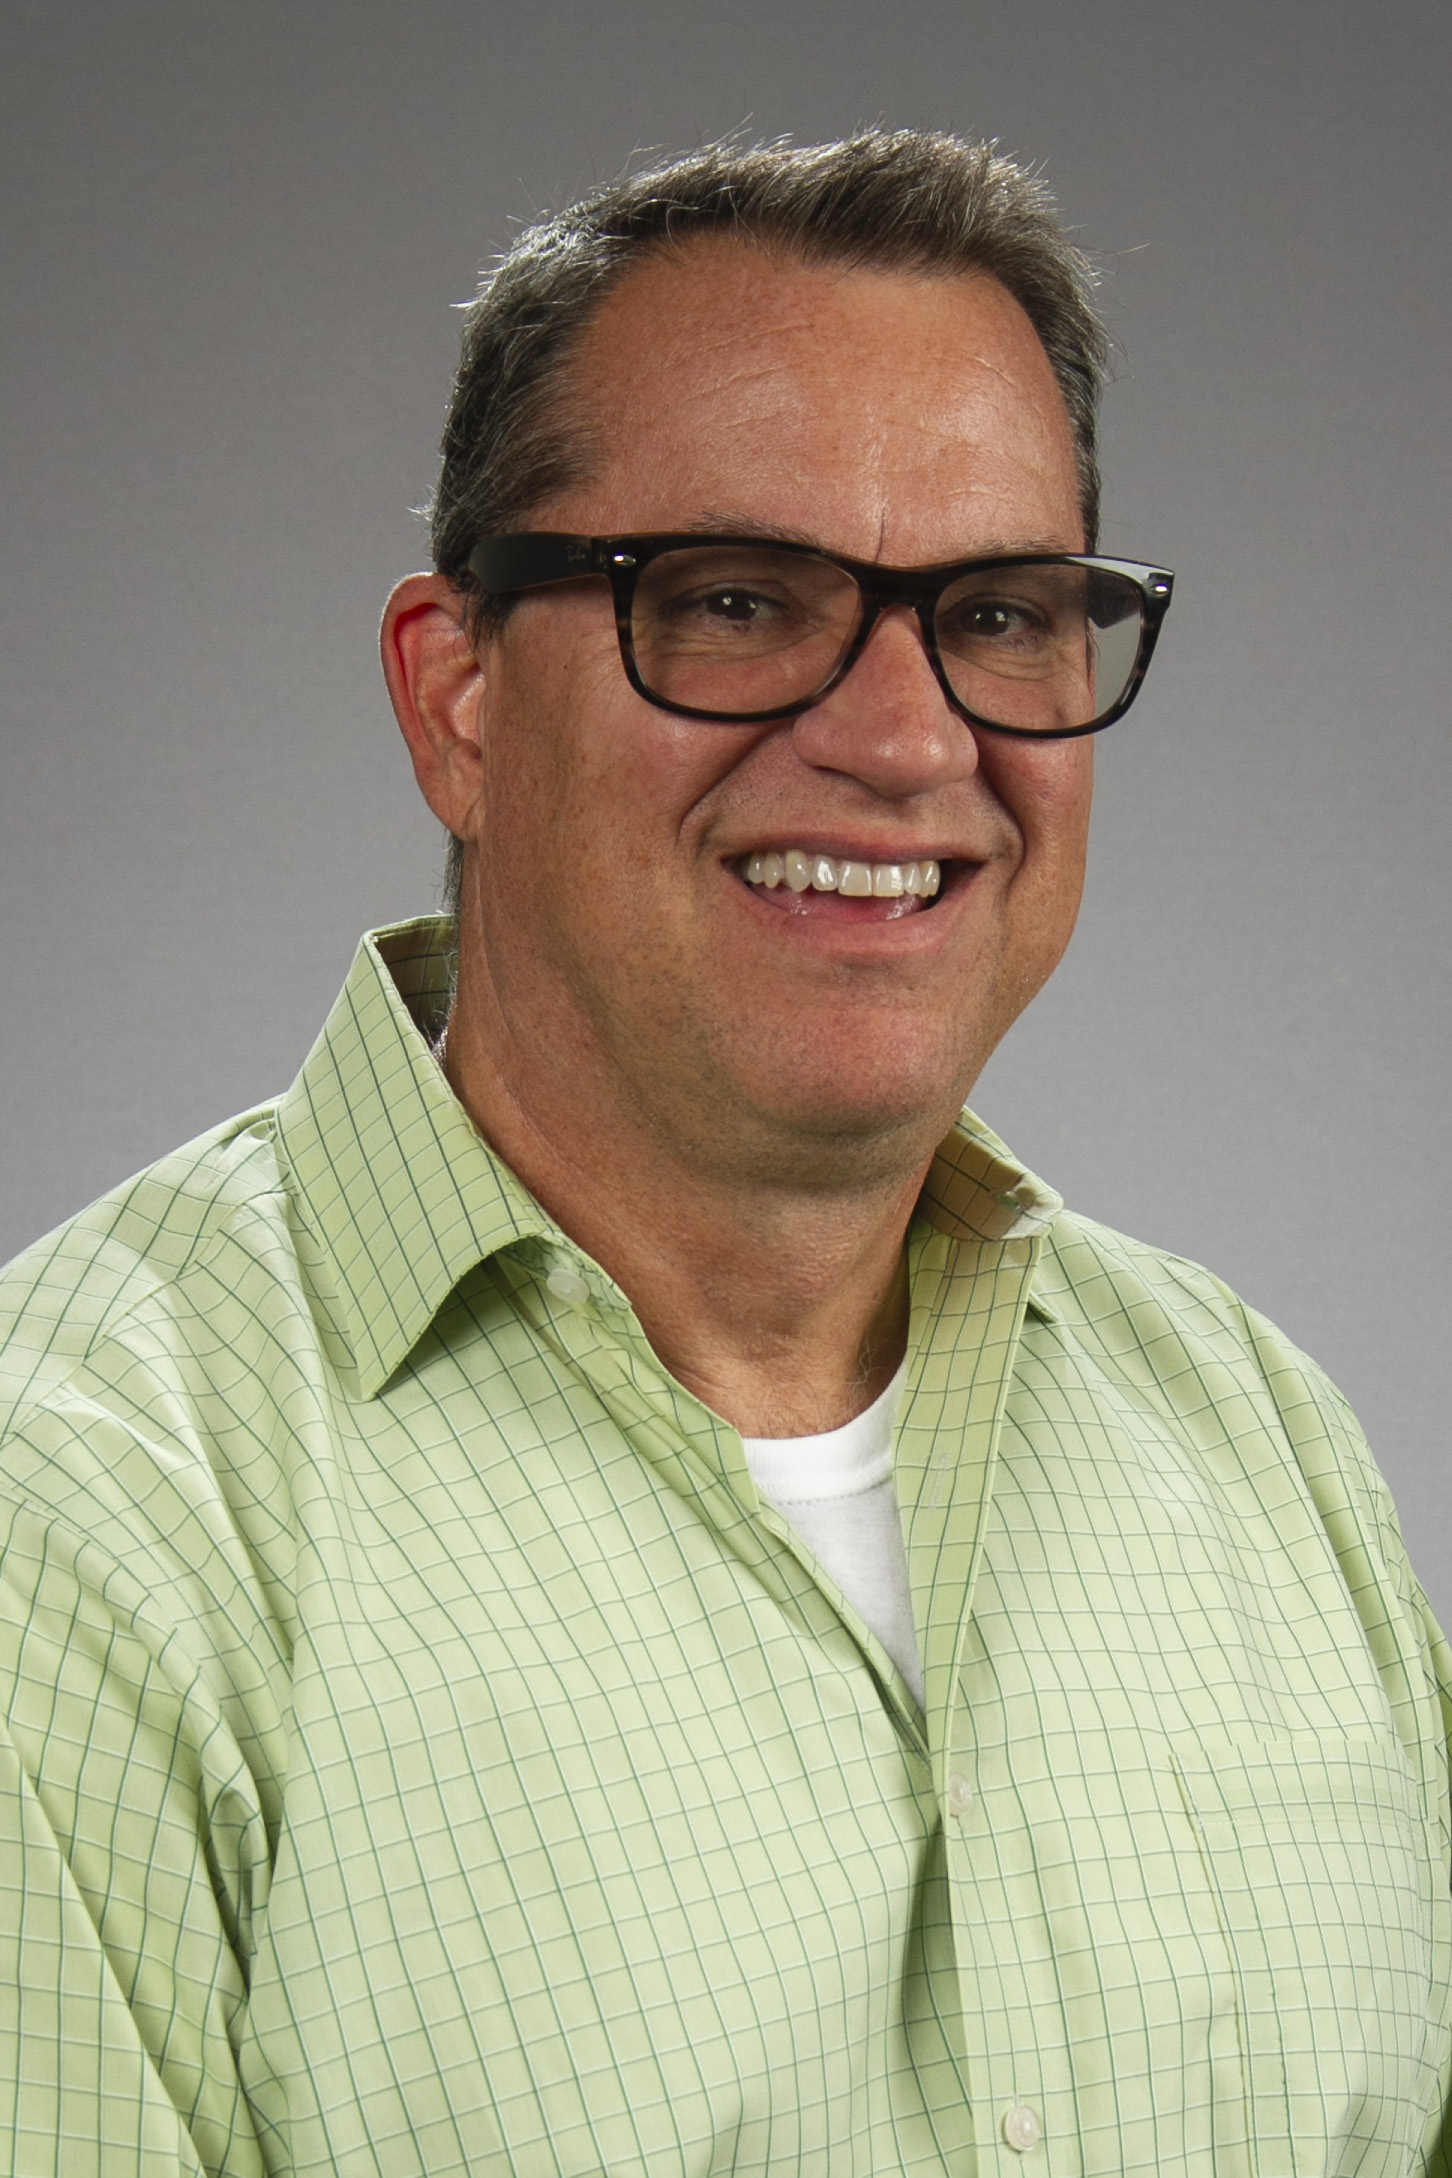 Man with dark hair, glasses, green shirt